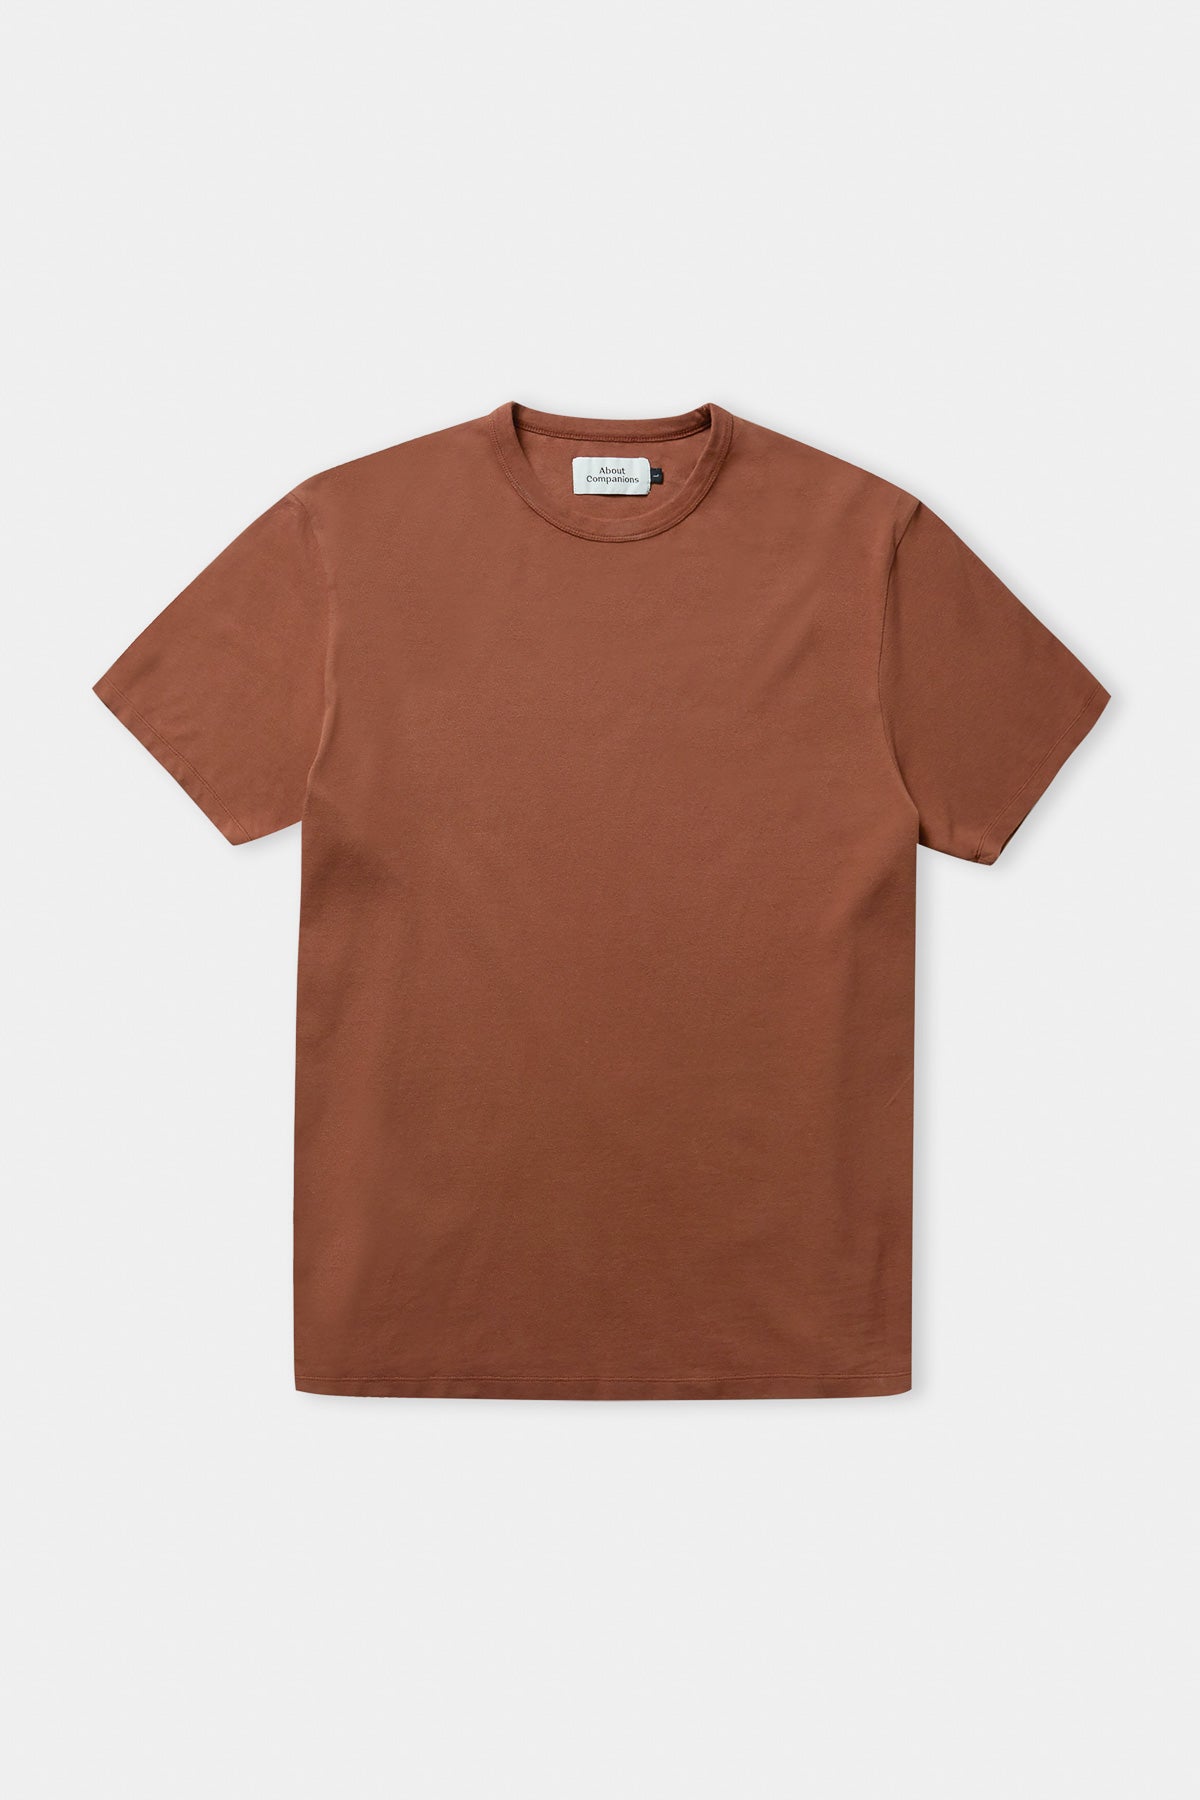 LIRON t-shirt eco pique moroccan red